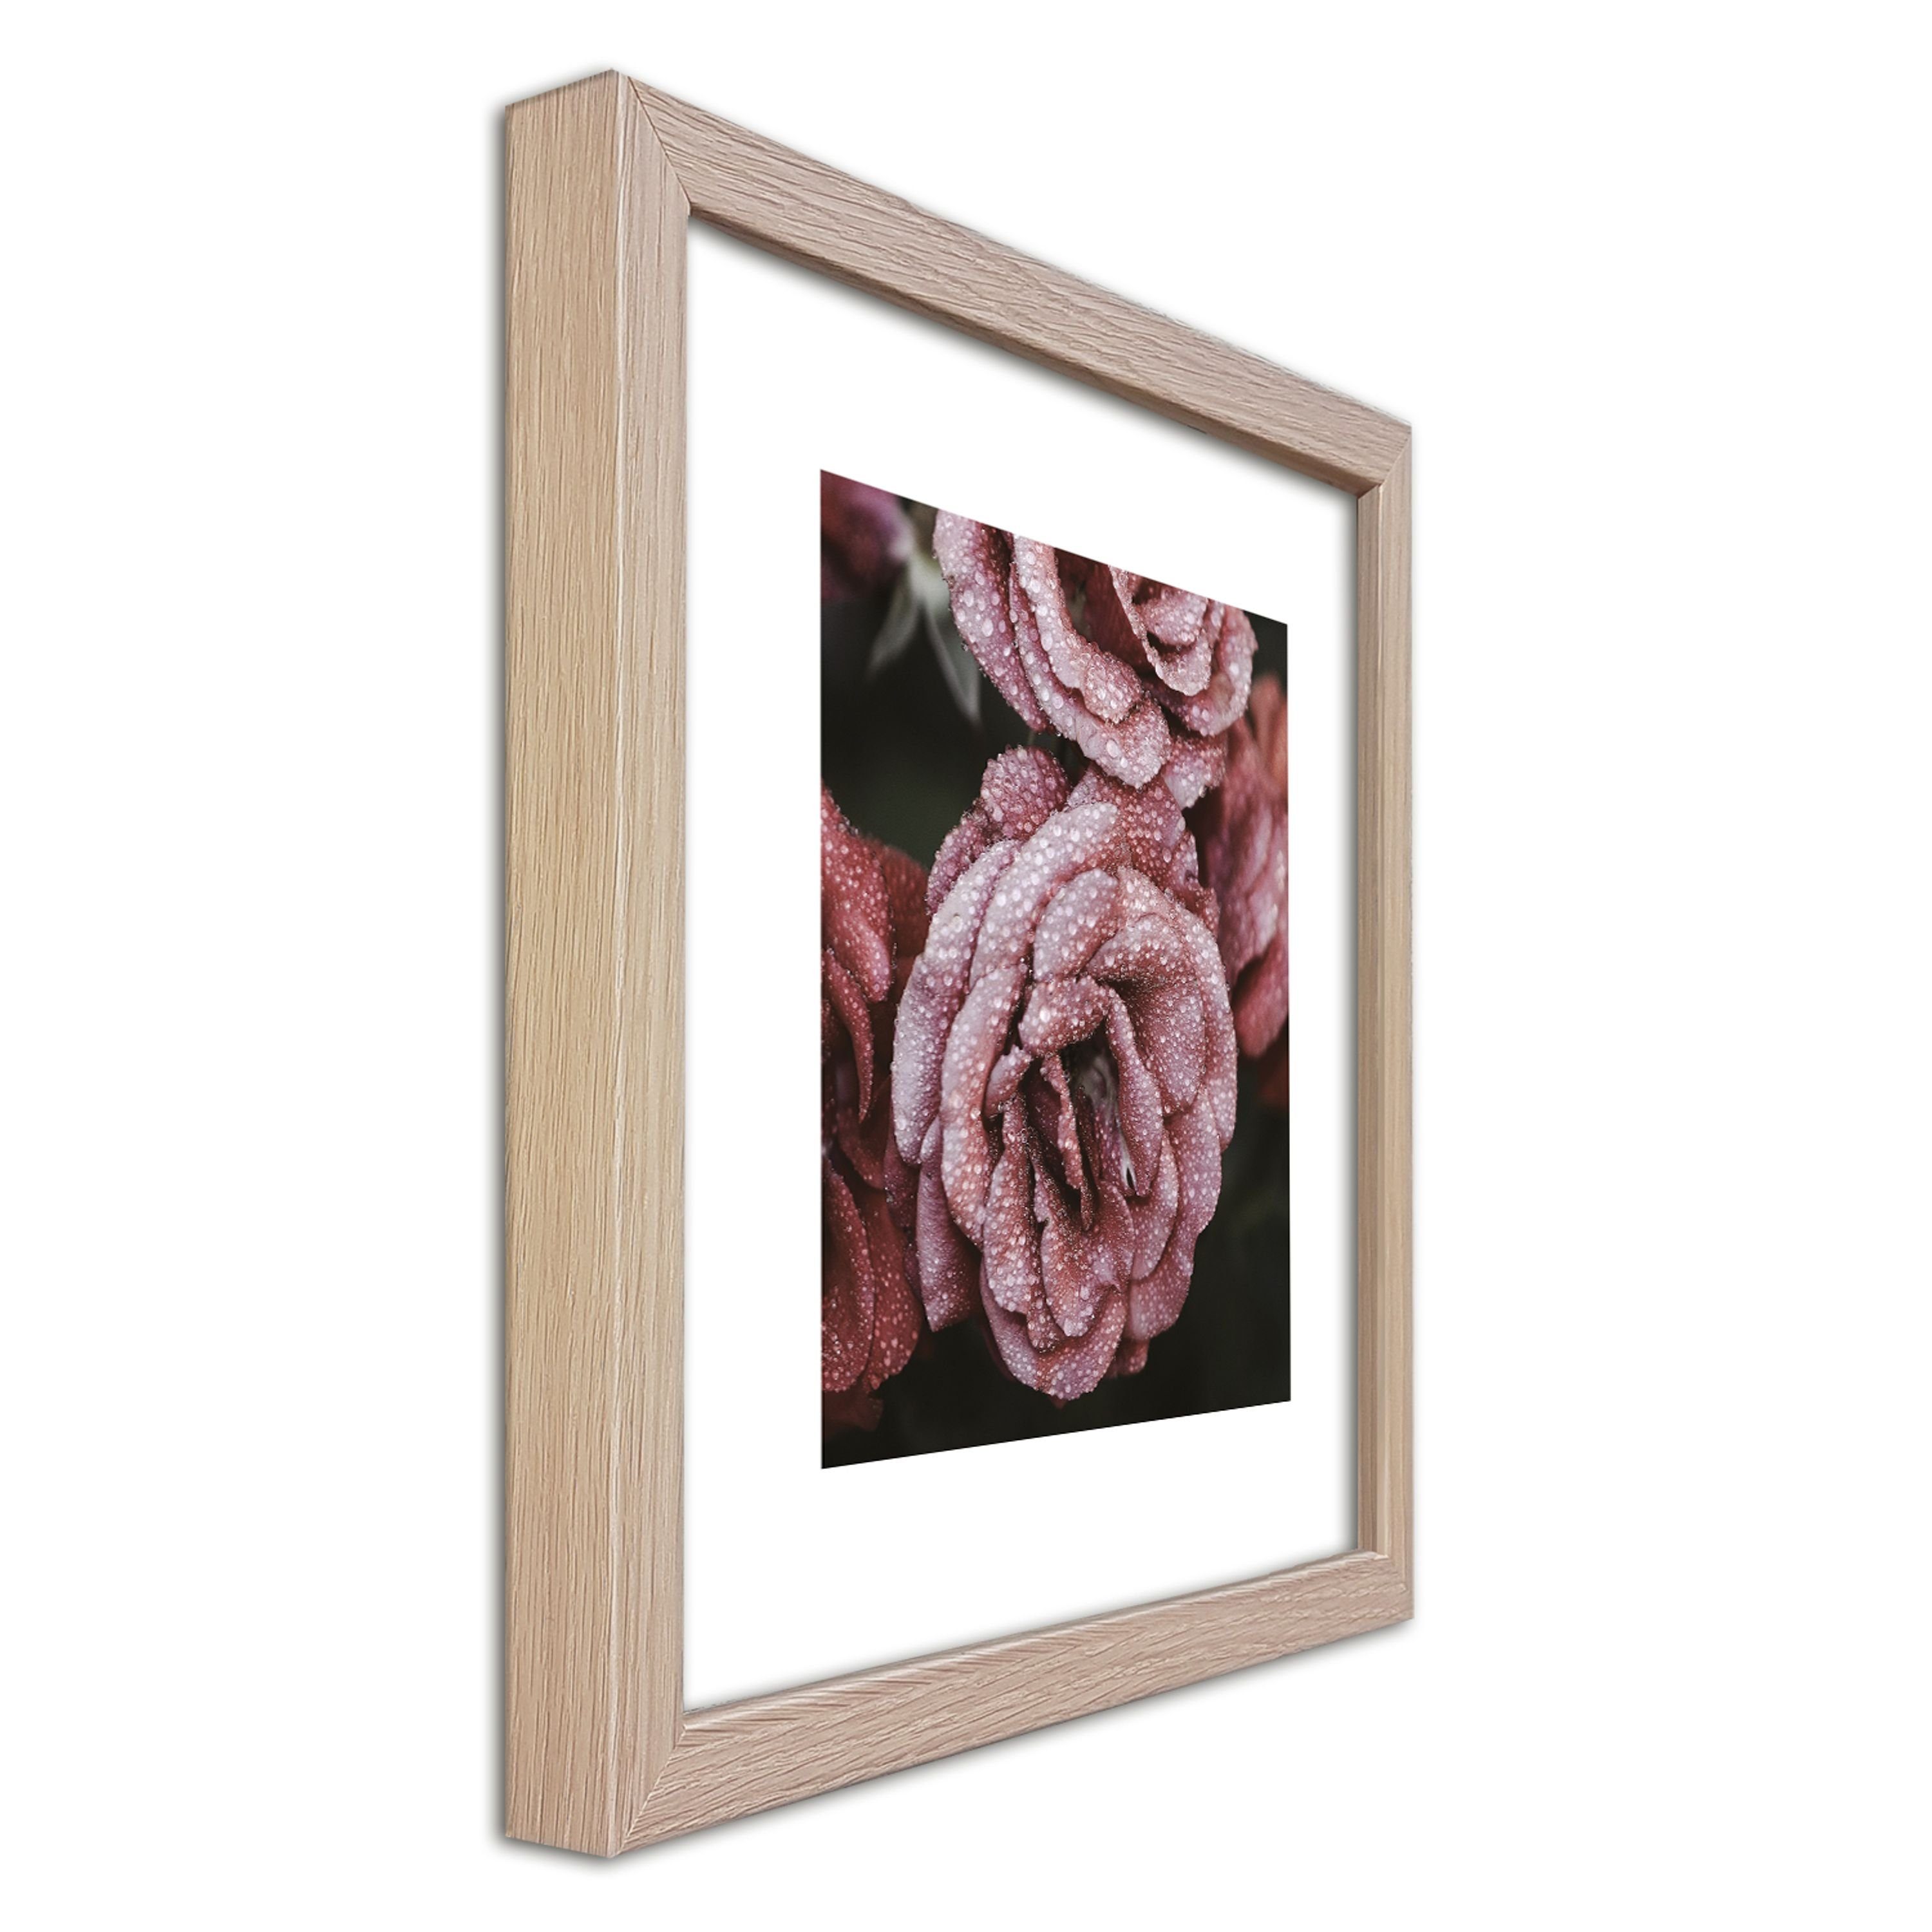 Rahmen Holz-Rahmen Design-Poster Blumen: Lila artissimo inkl. 30x30cm IV Bild / gerahmt Bild / mit Blüten Wandbild,